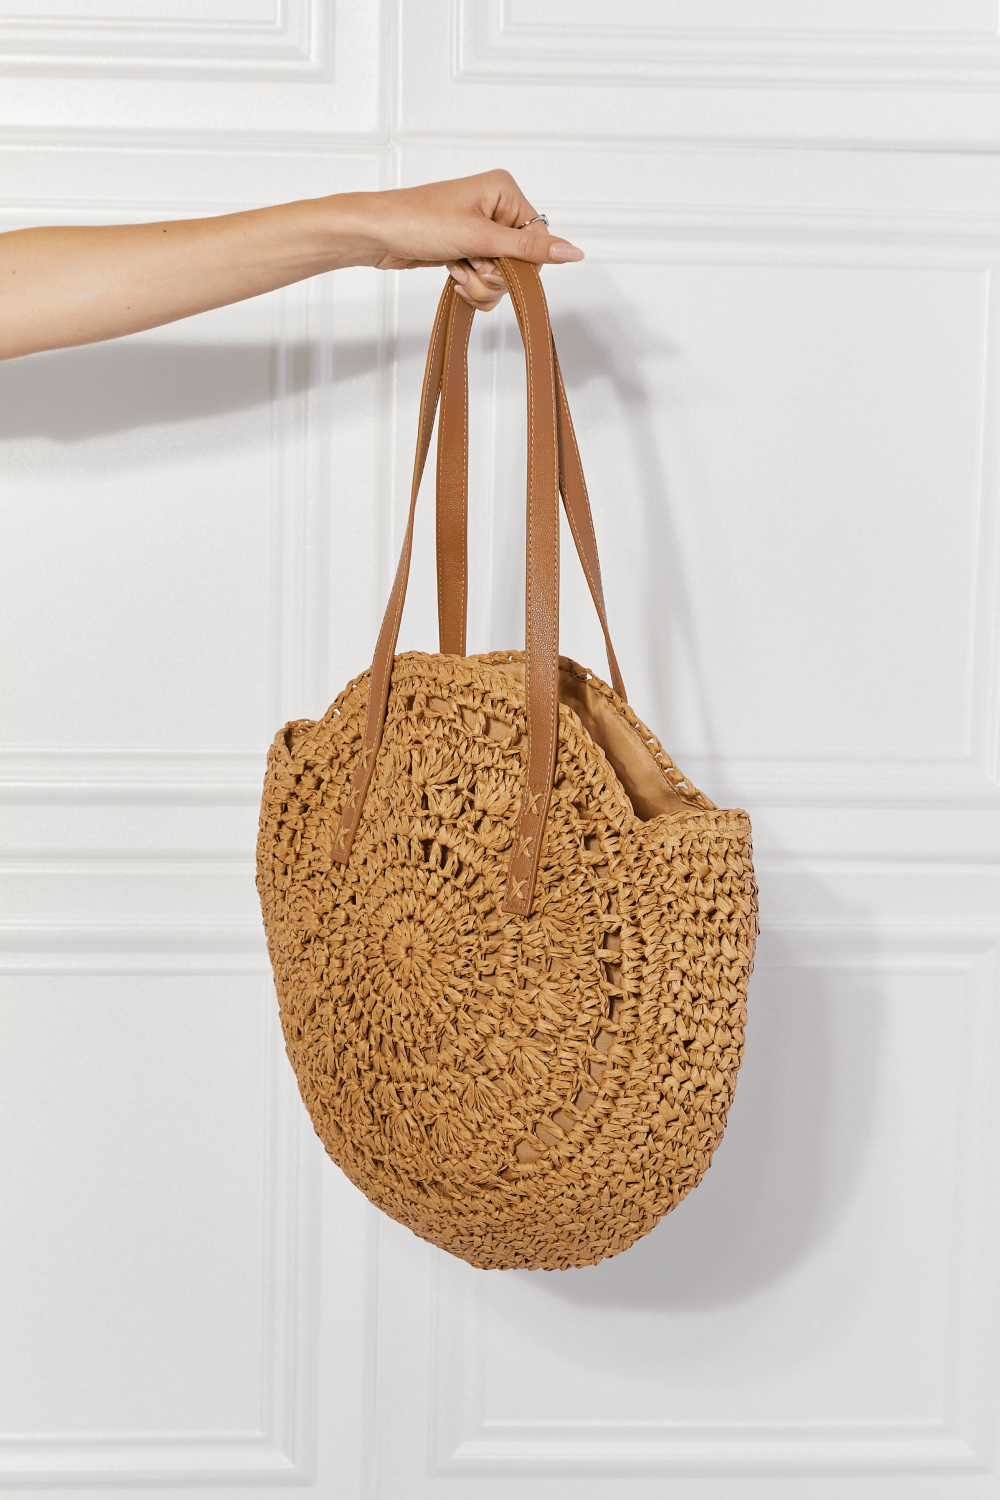 Sienna Justin Taylor C&#39;est La Vie Crochet Handbag in Caramel Sentient Beauty Fashions Bag